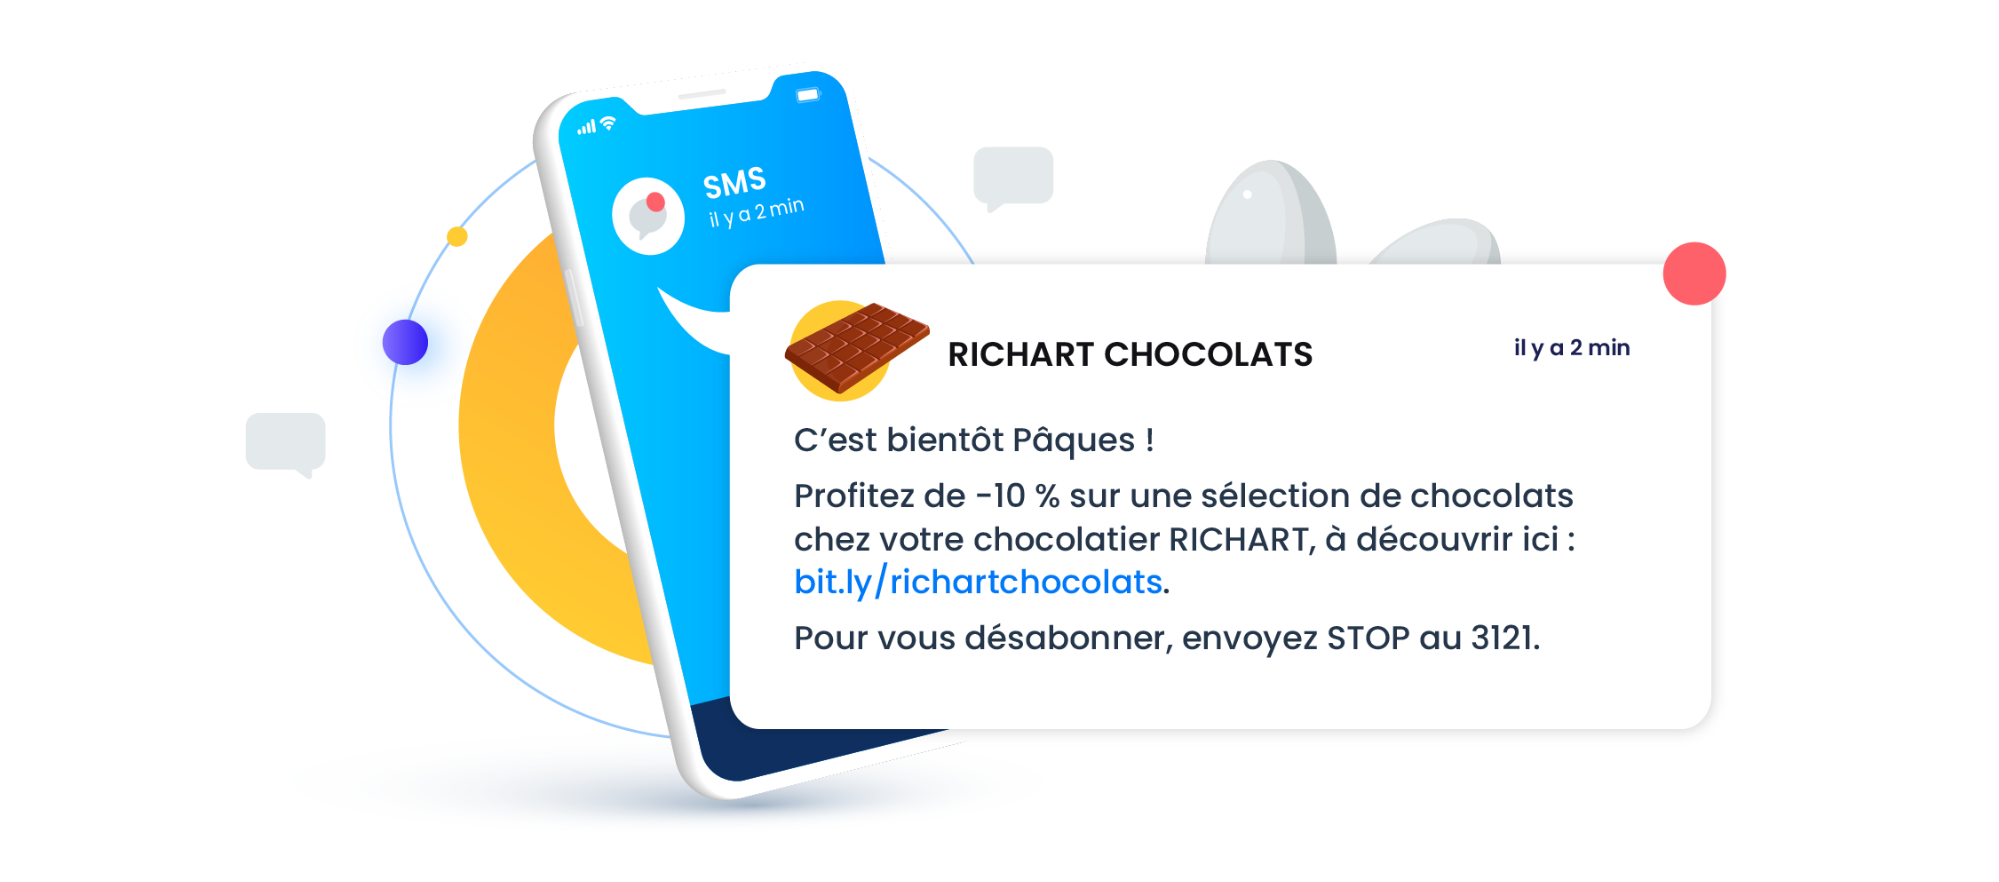 SMS - Richart Chocolats